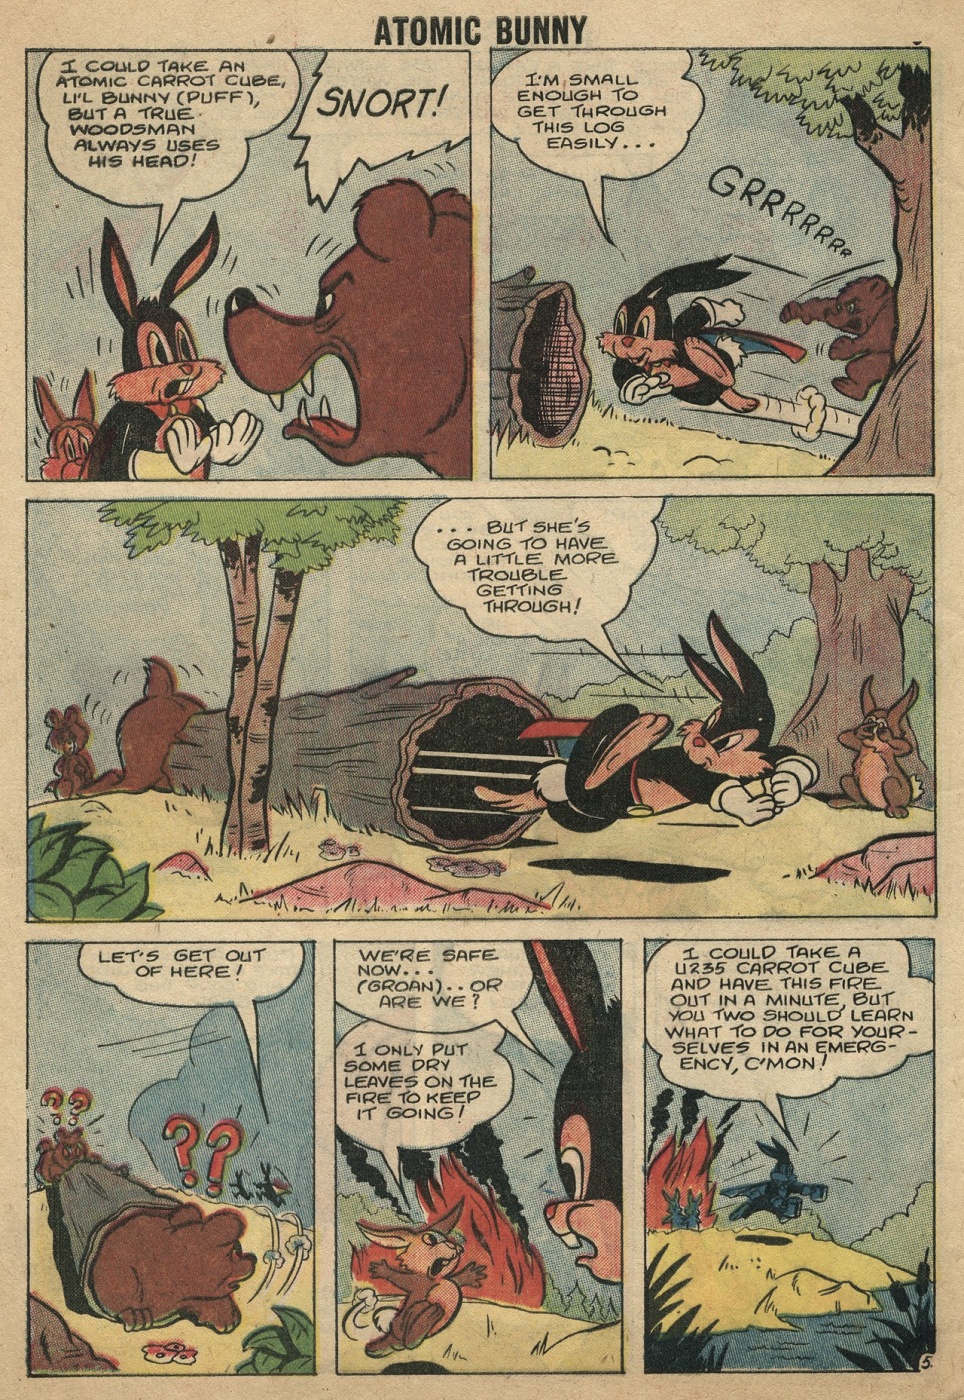 Atomic-Bunny-Comic-Strips (8)